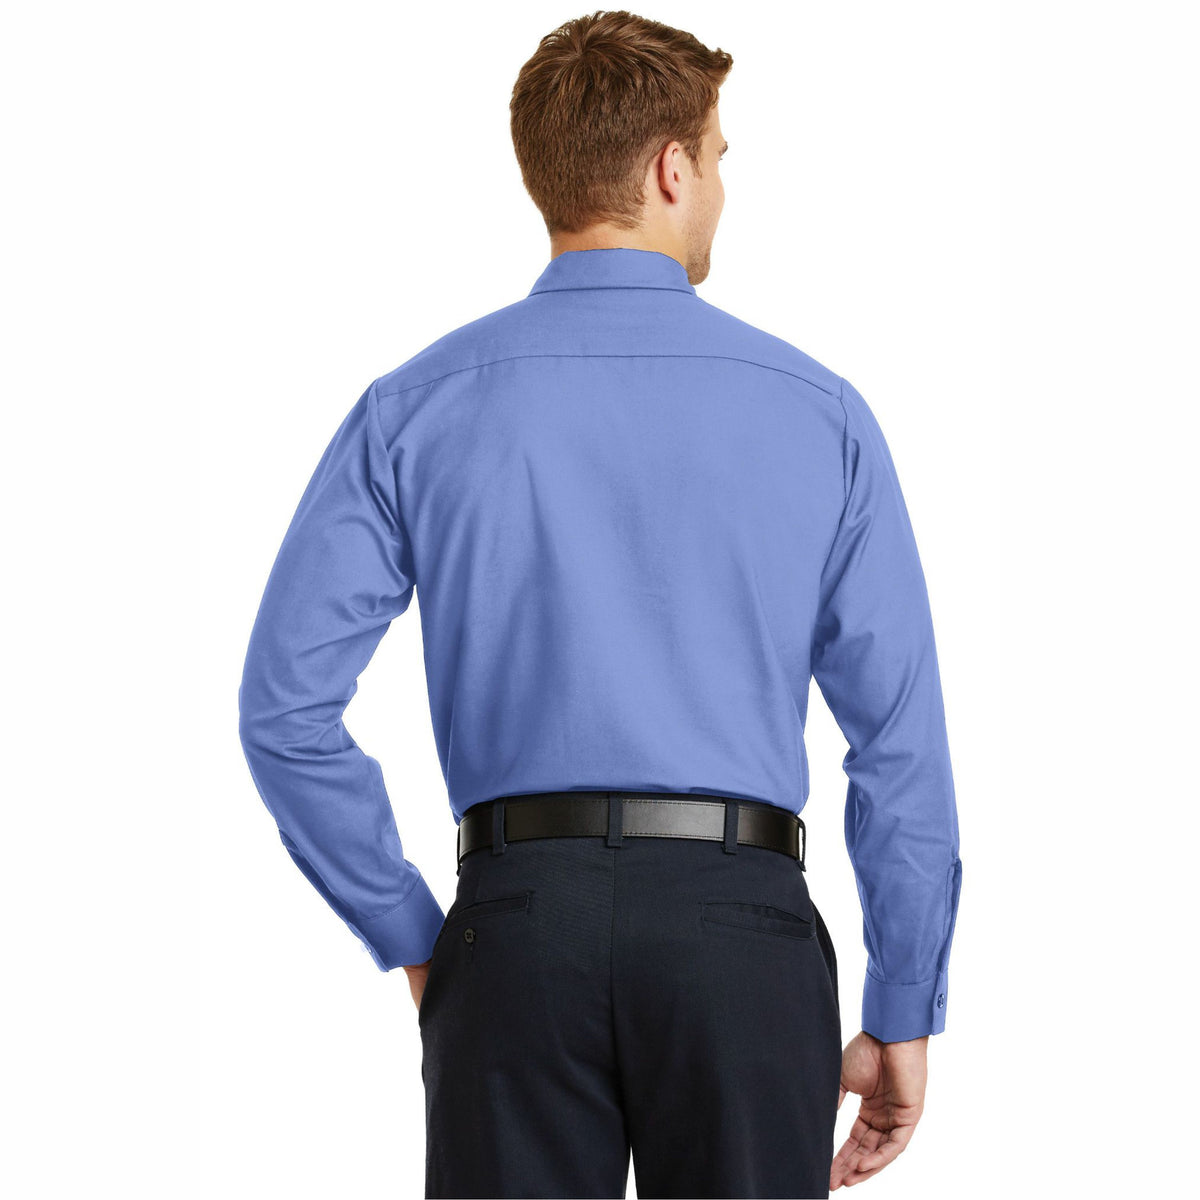 Red Kap® Long Sleeve Industrial Work Shirt - Free Shipping